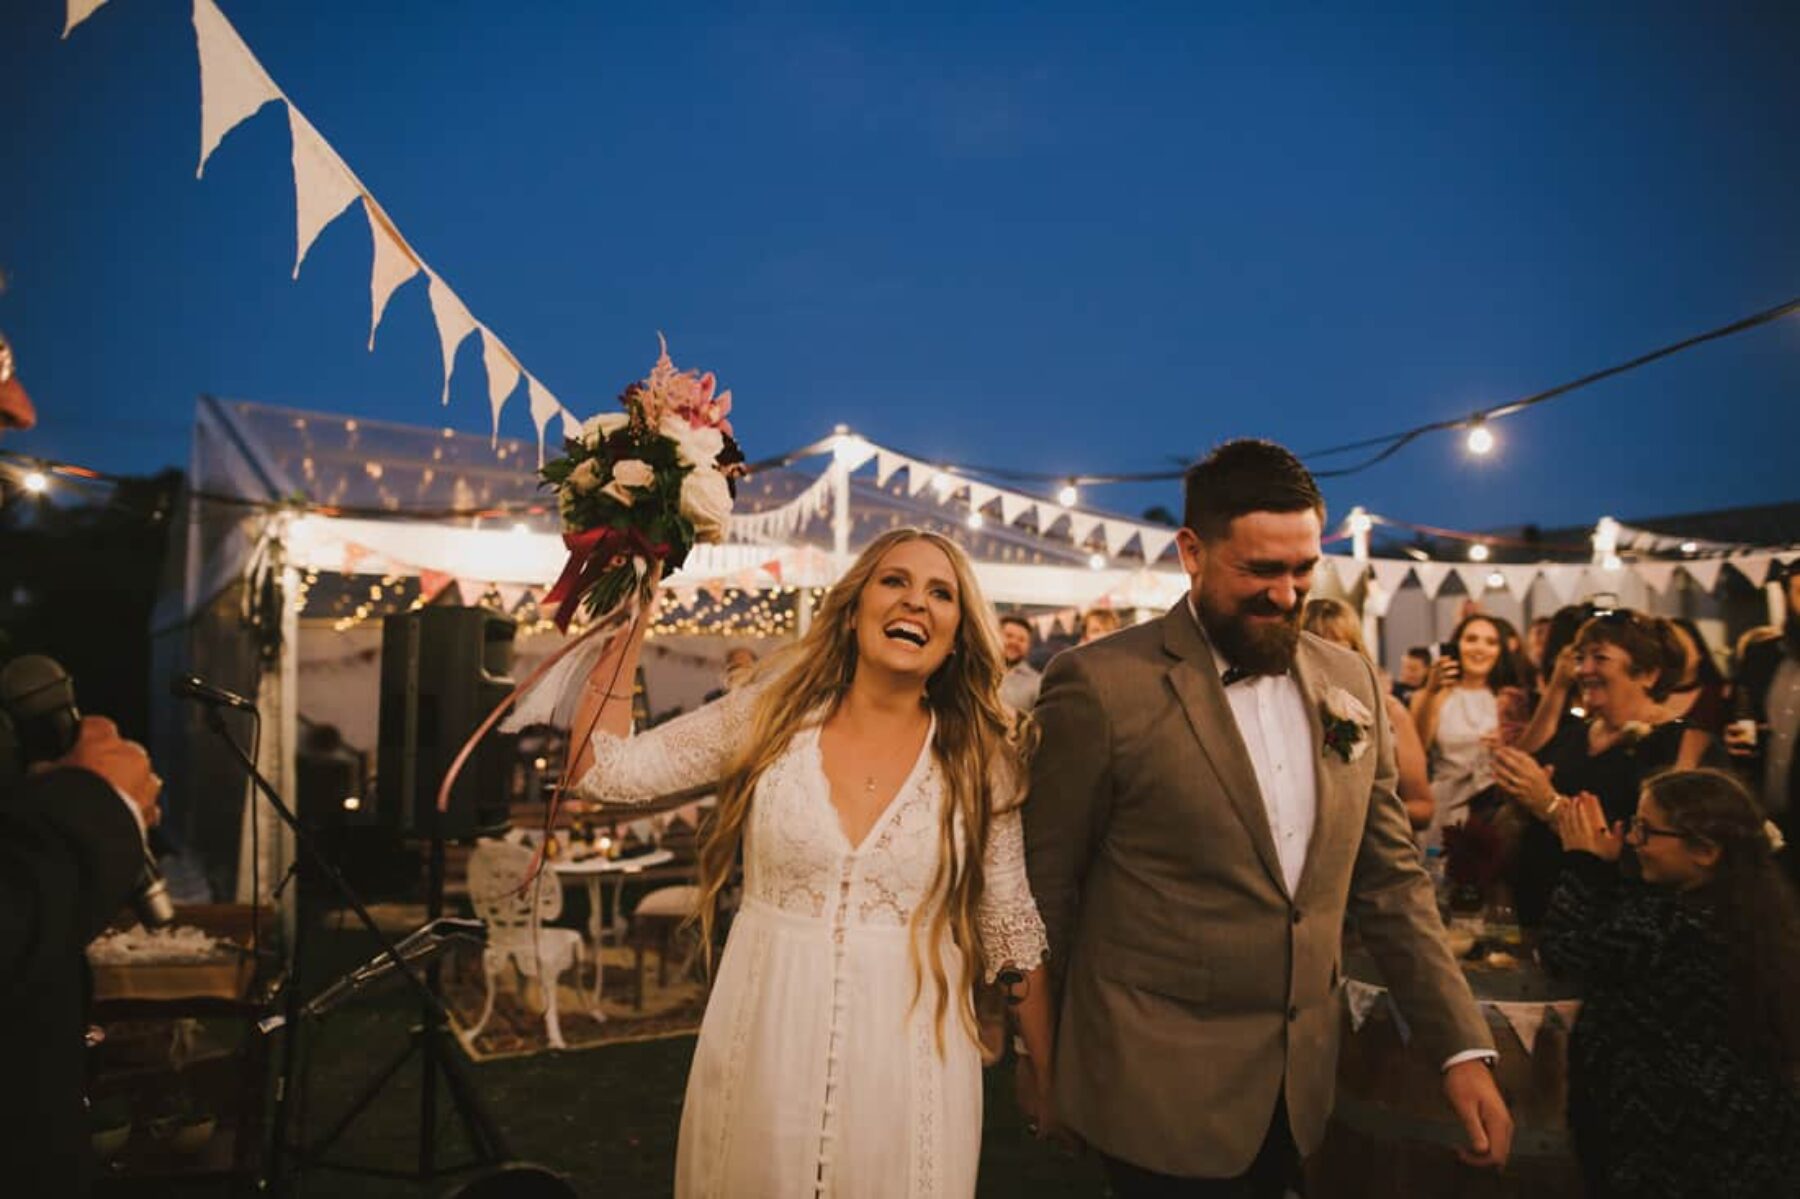 DIY backyard wedding with a vintage-bohemian vibe